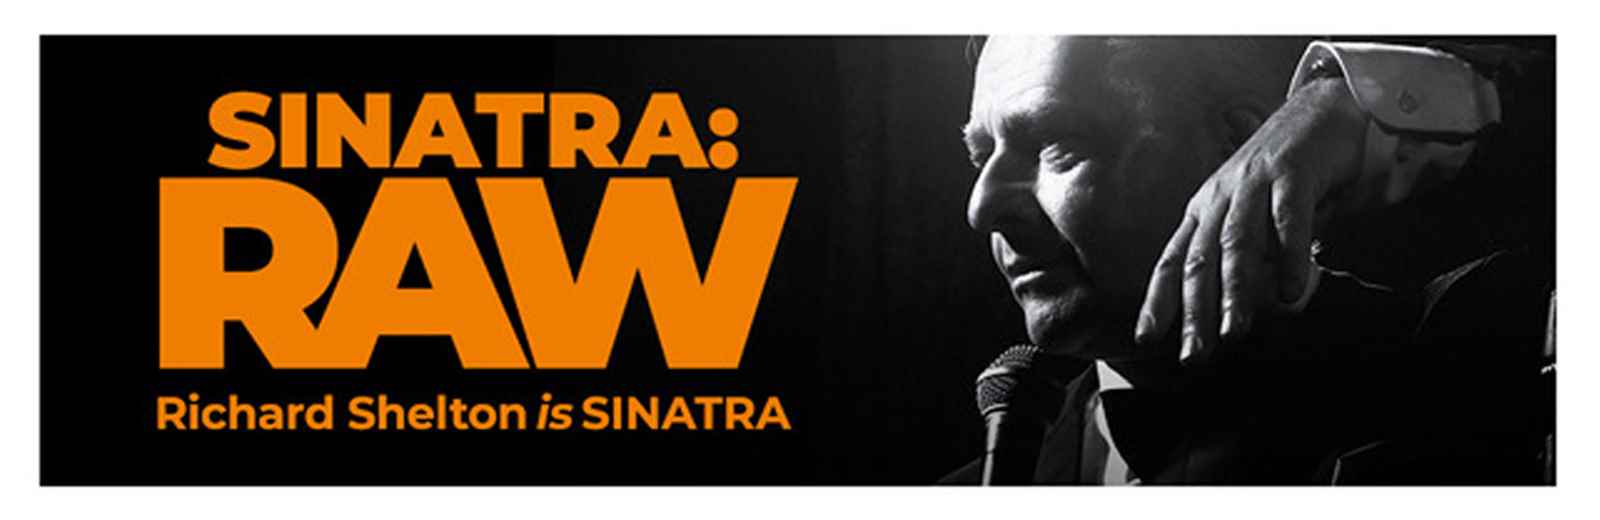 Sinatra: Raw